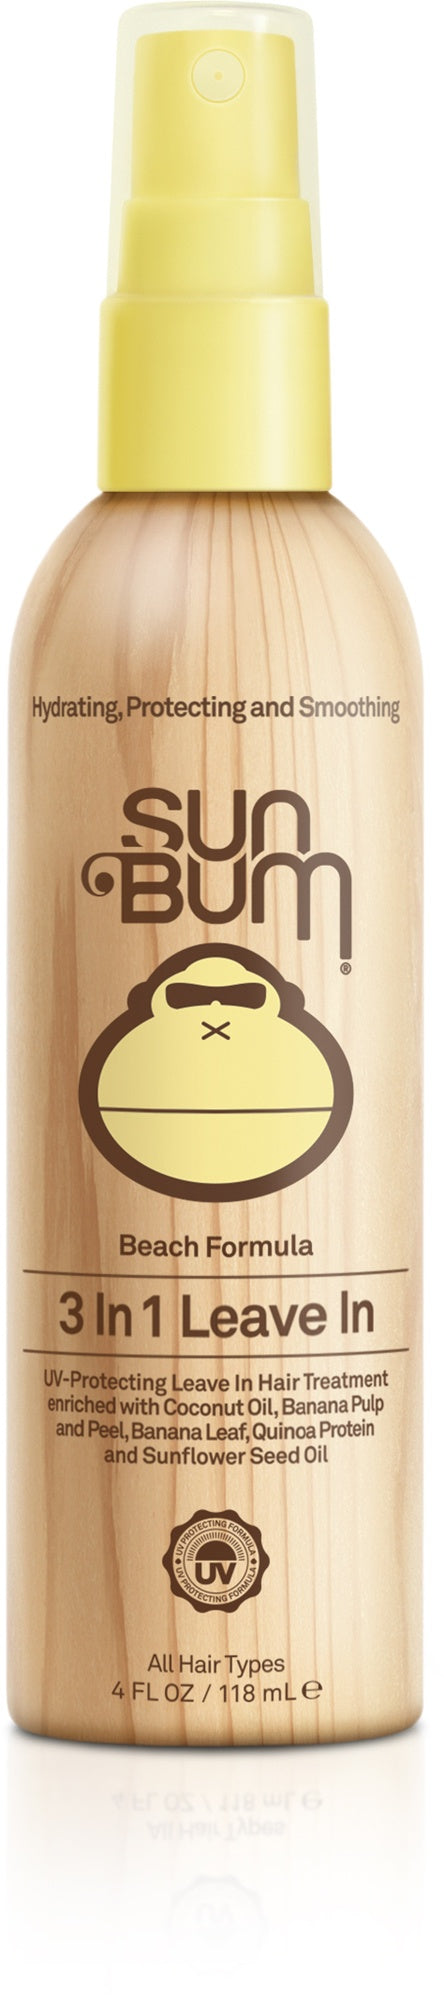 Sun Bum Beach Formula 3-in-1 Leave-In Conditioner - 4 fl oz bottle